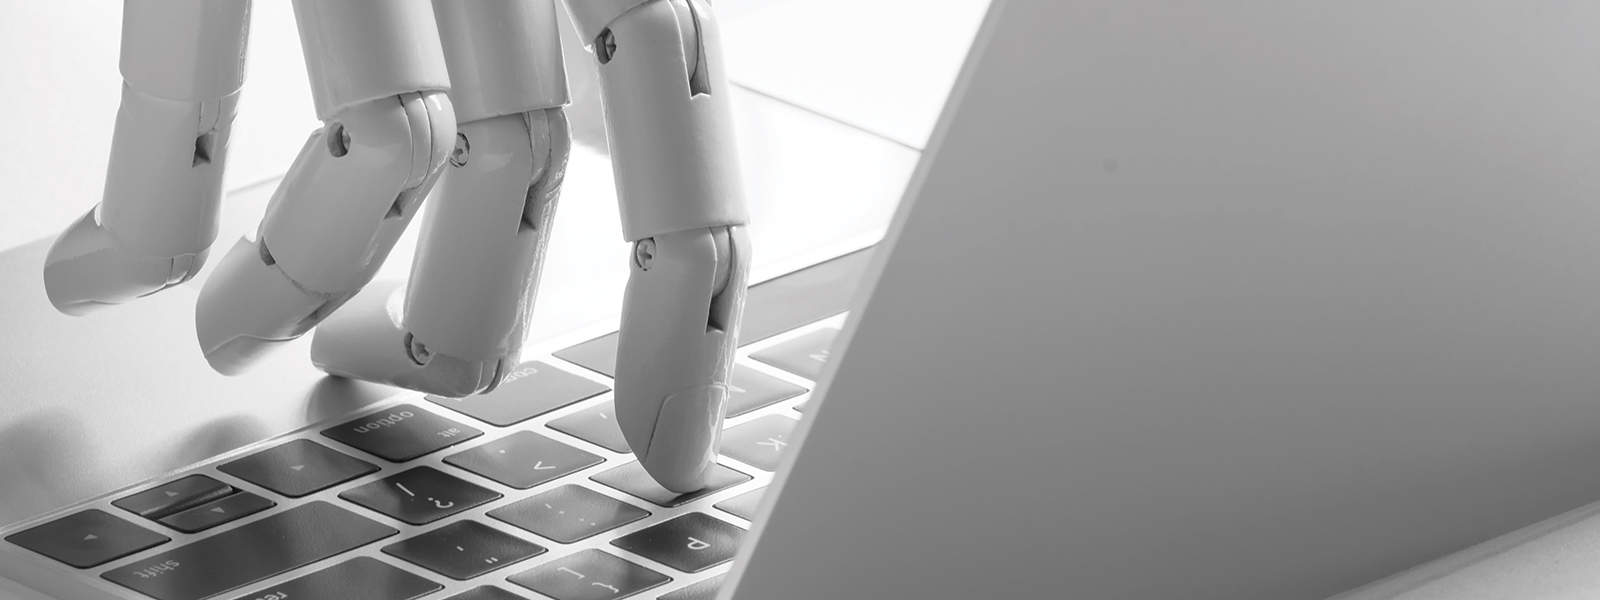 Robot AI keyboard